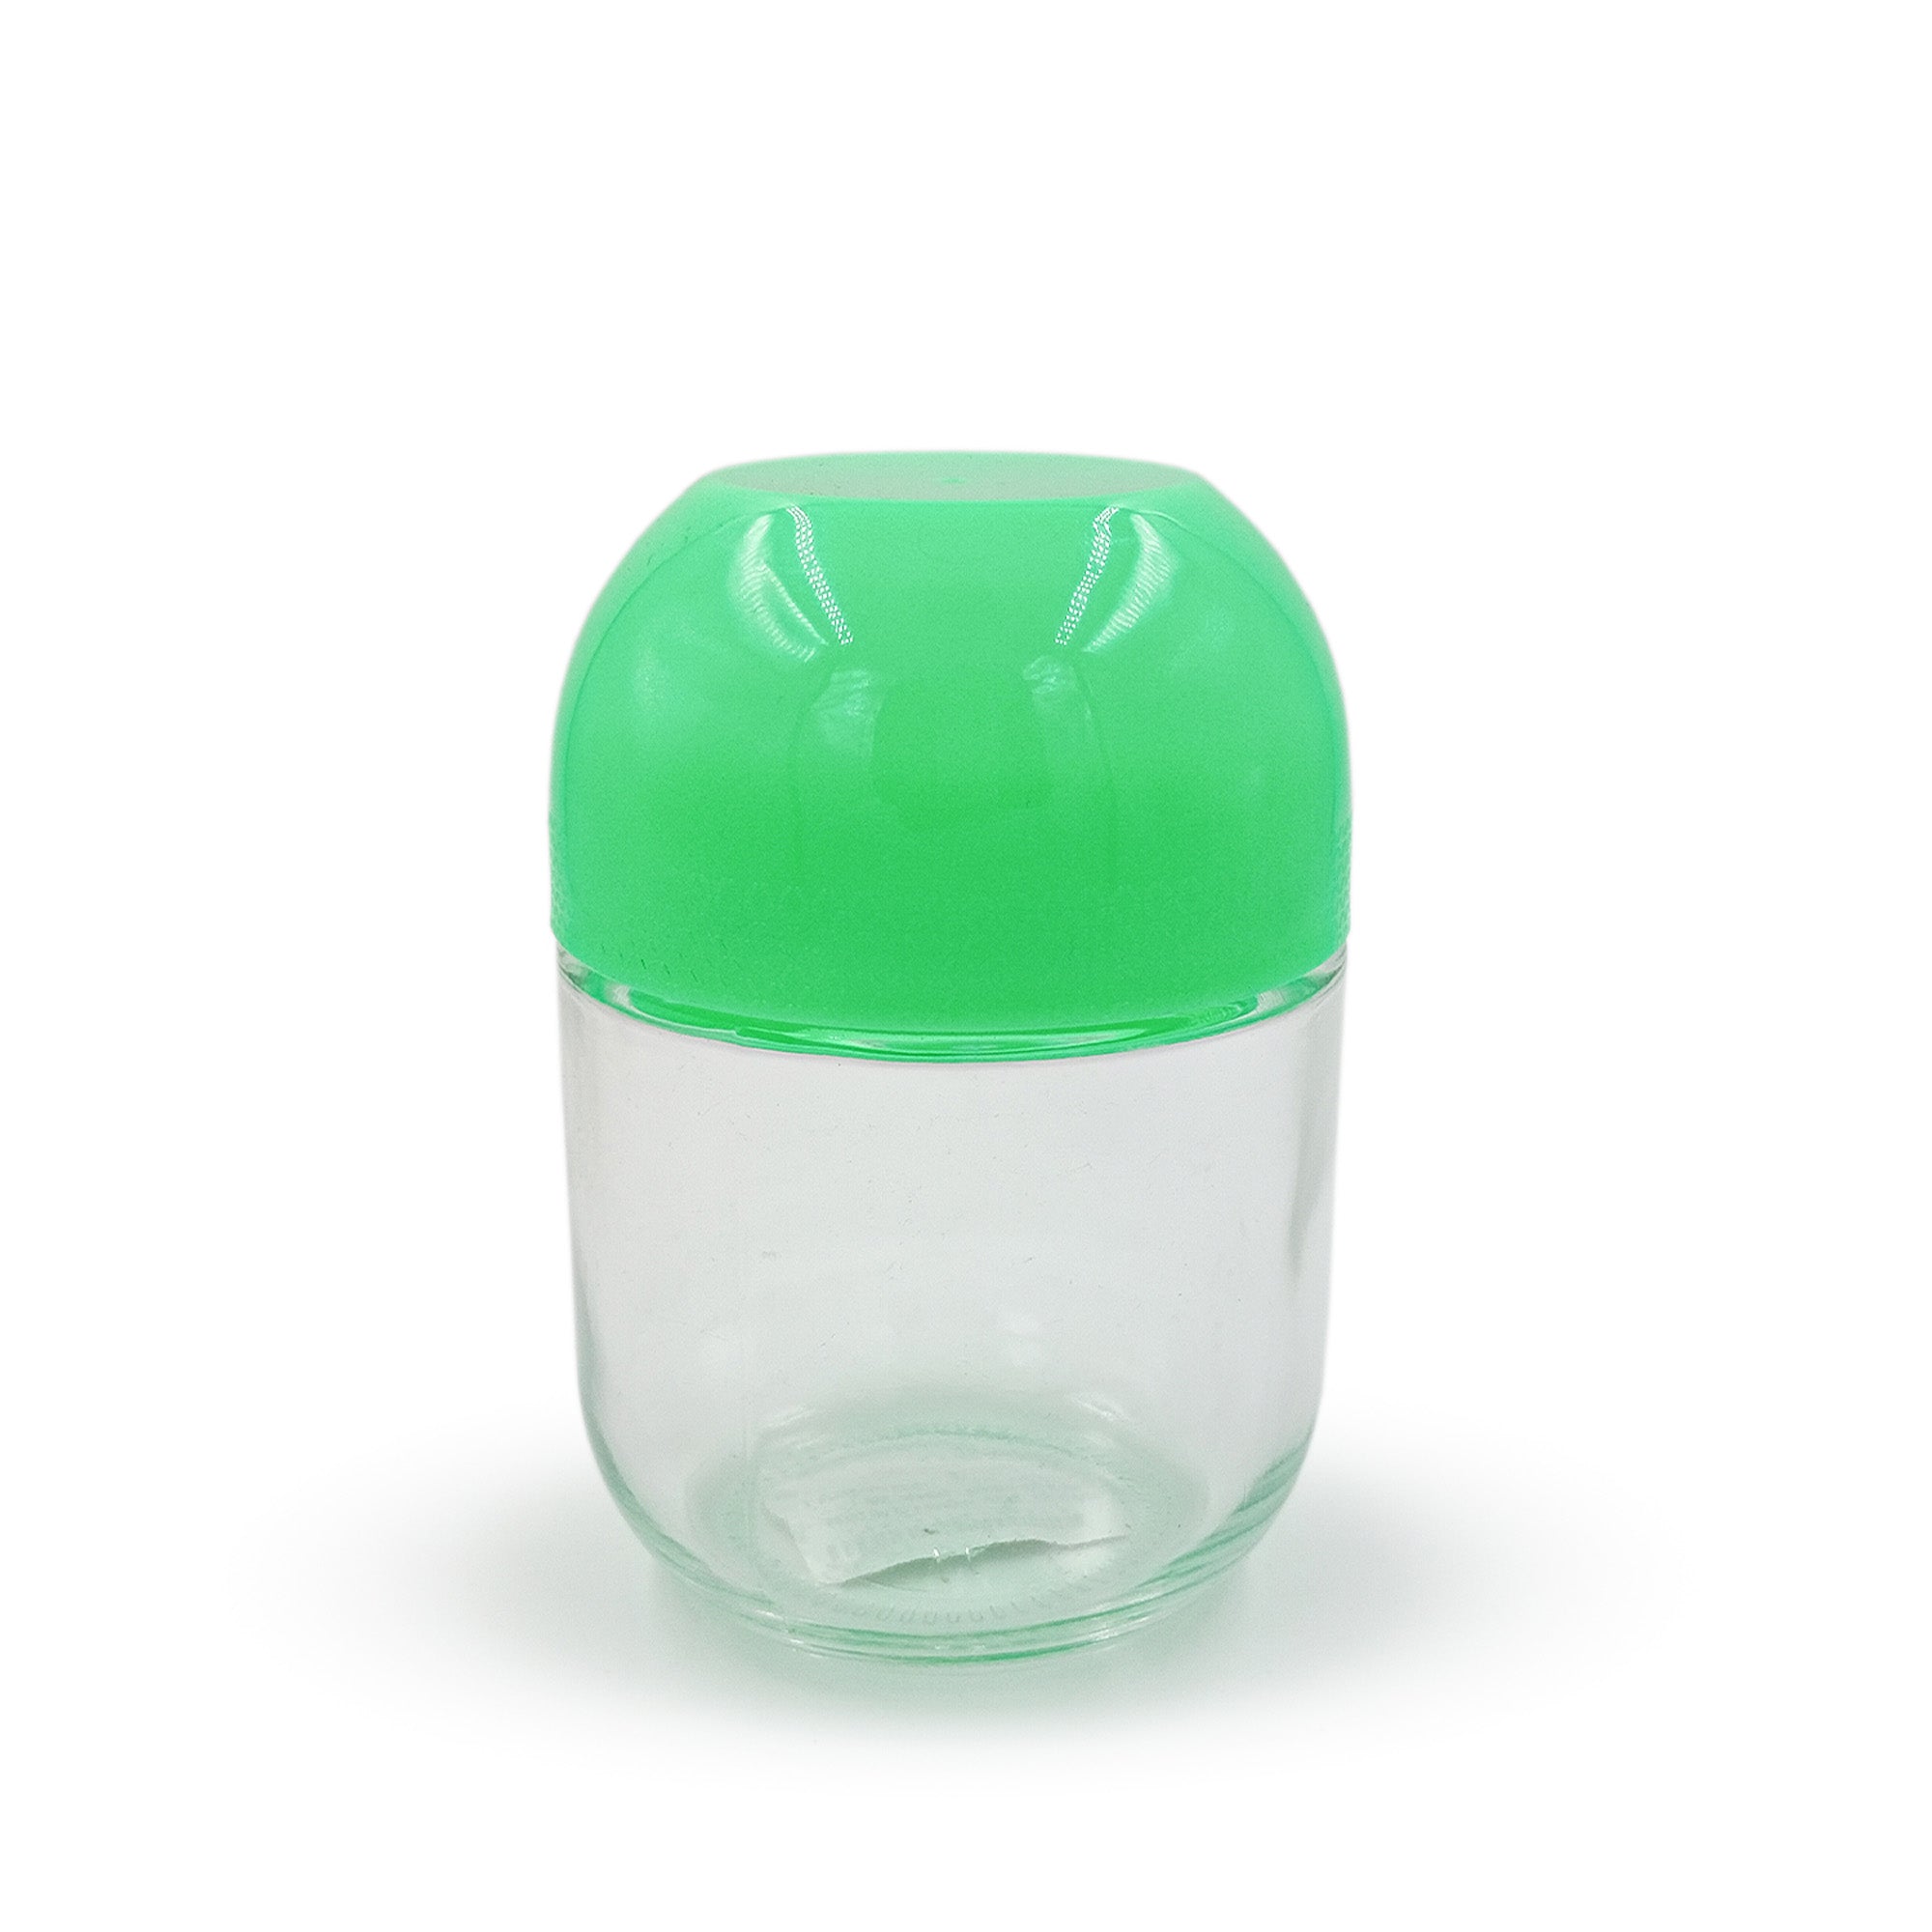 Red Butler Jars Glass Jars | 2pcs Set |350ml | Green DSGW35A1 Glass Jars 2pcs Set -350ml (Green) Redbutler